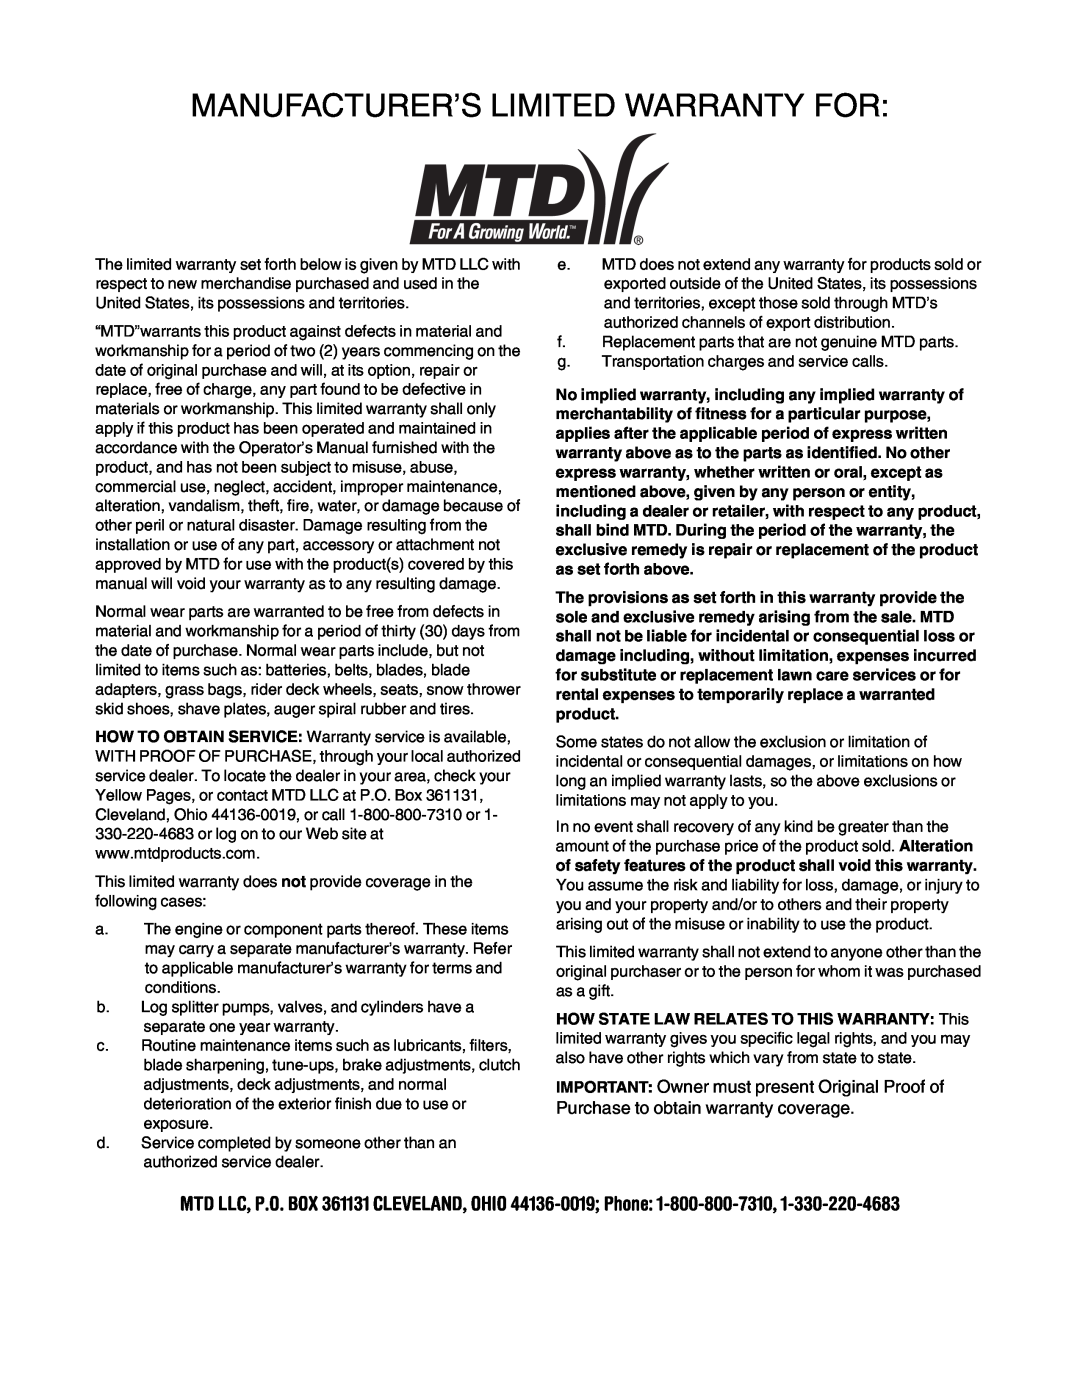 MTD 549 manual Manufacturer’S Limited Warranty For 